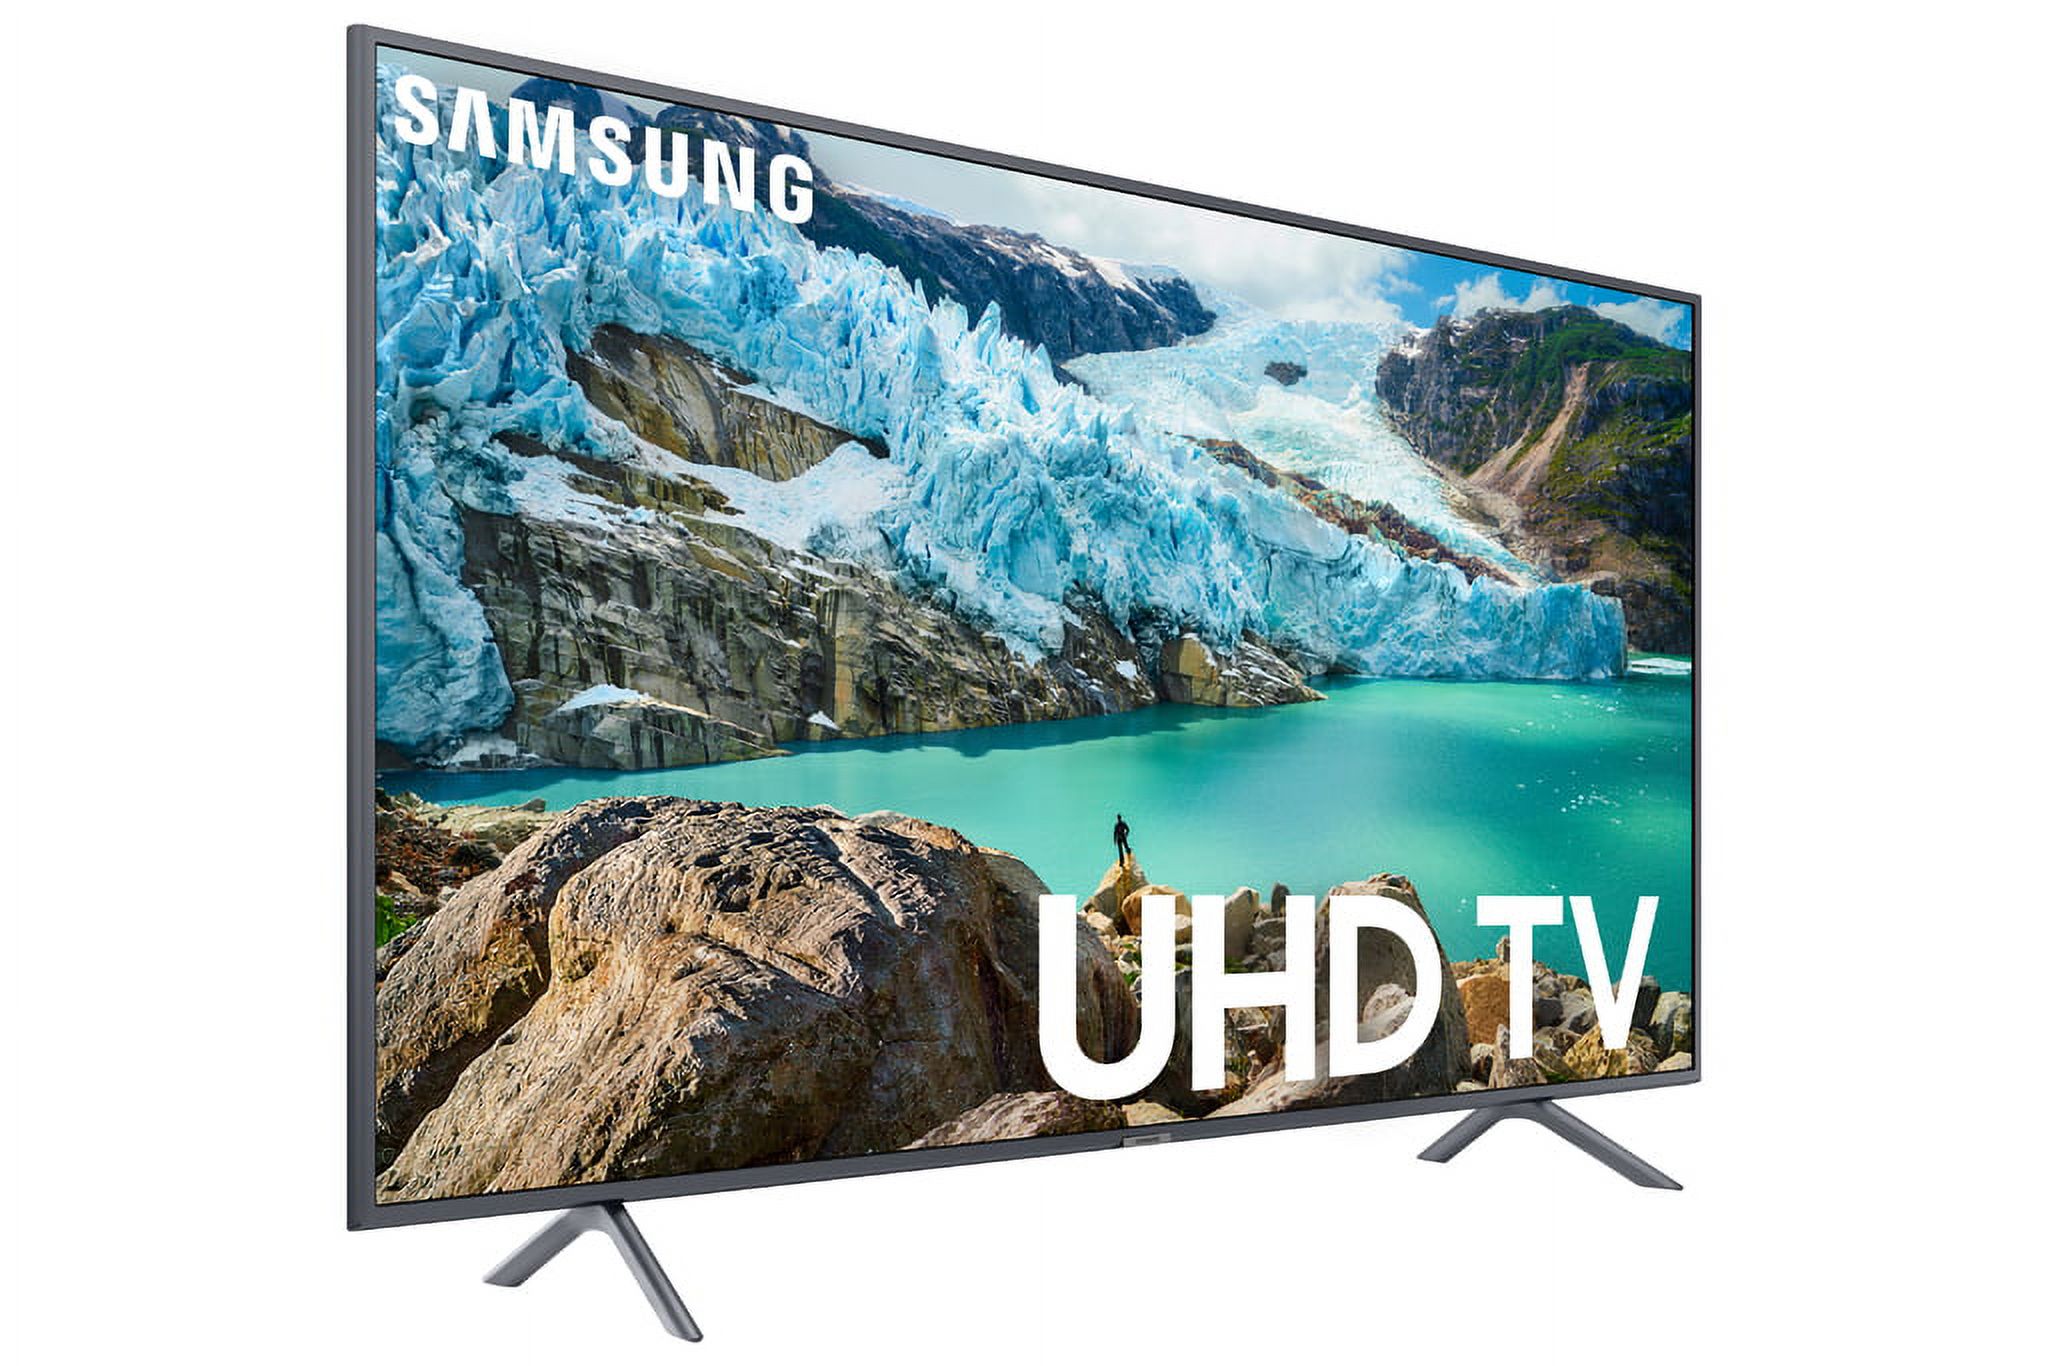 SAMSUNG 50" Class 4K Ultra HD (2160P) HDR Smart LED TV UN50RU7200 (2019 Model) - image 4 of 8